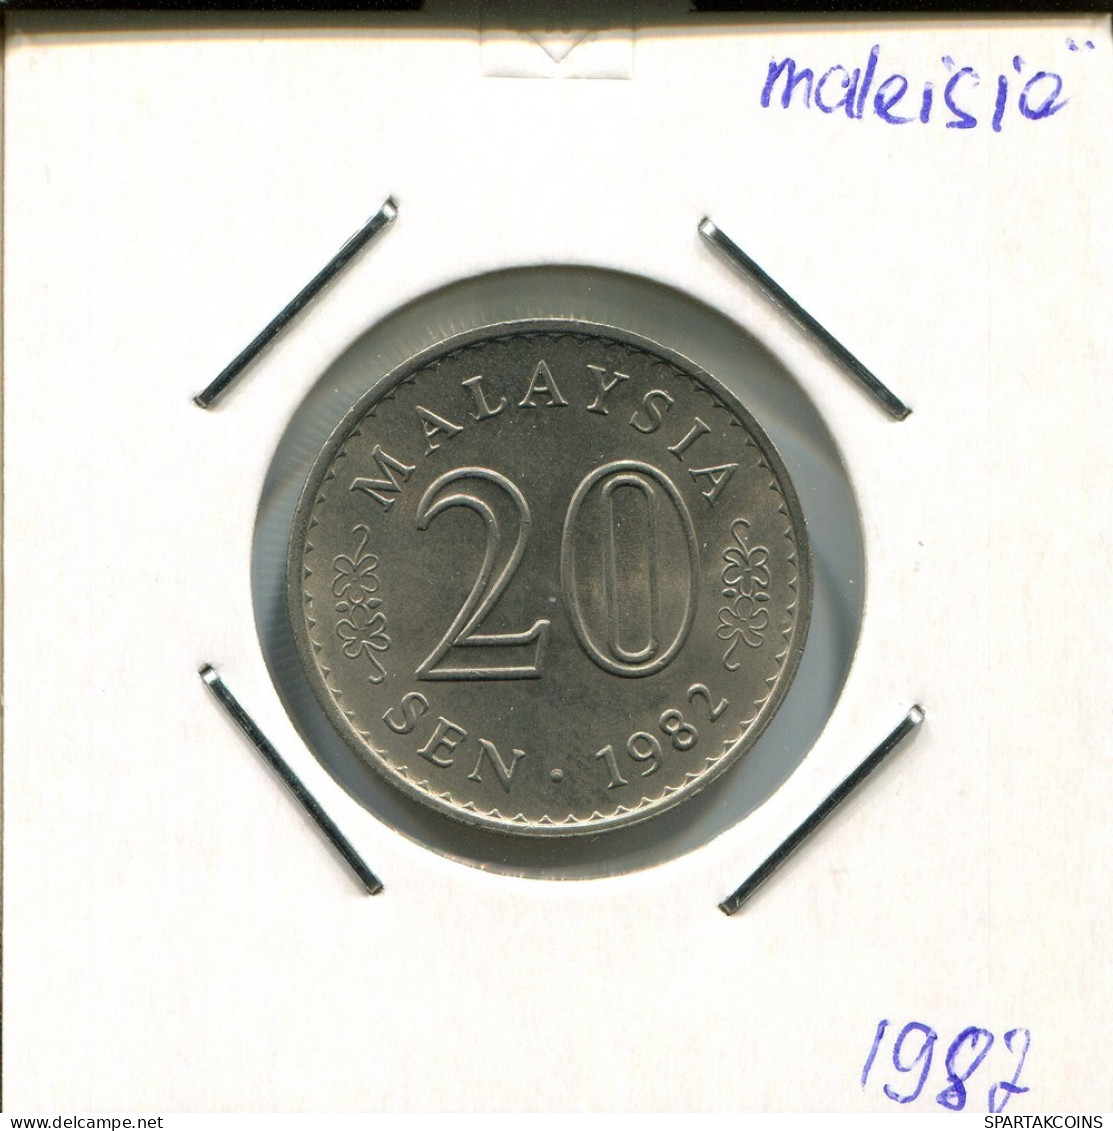 20 SEN 1982 MALAYSIEN MALAYSIA Münze #AR459.D.A - Malasia